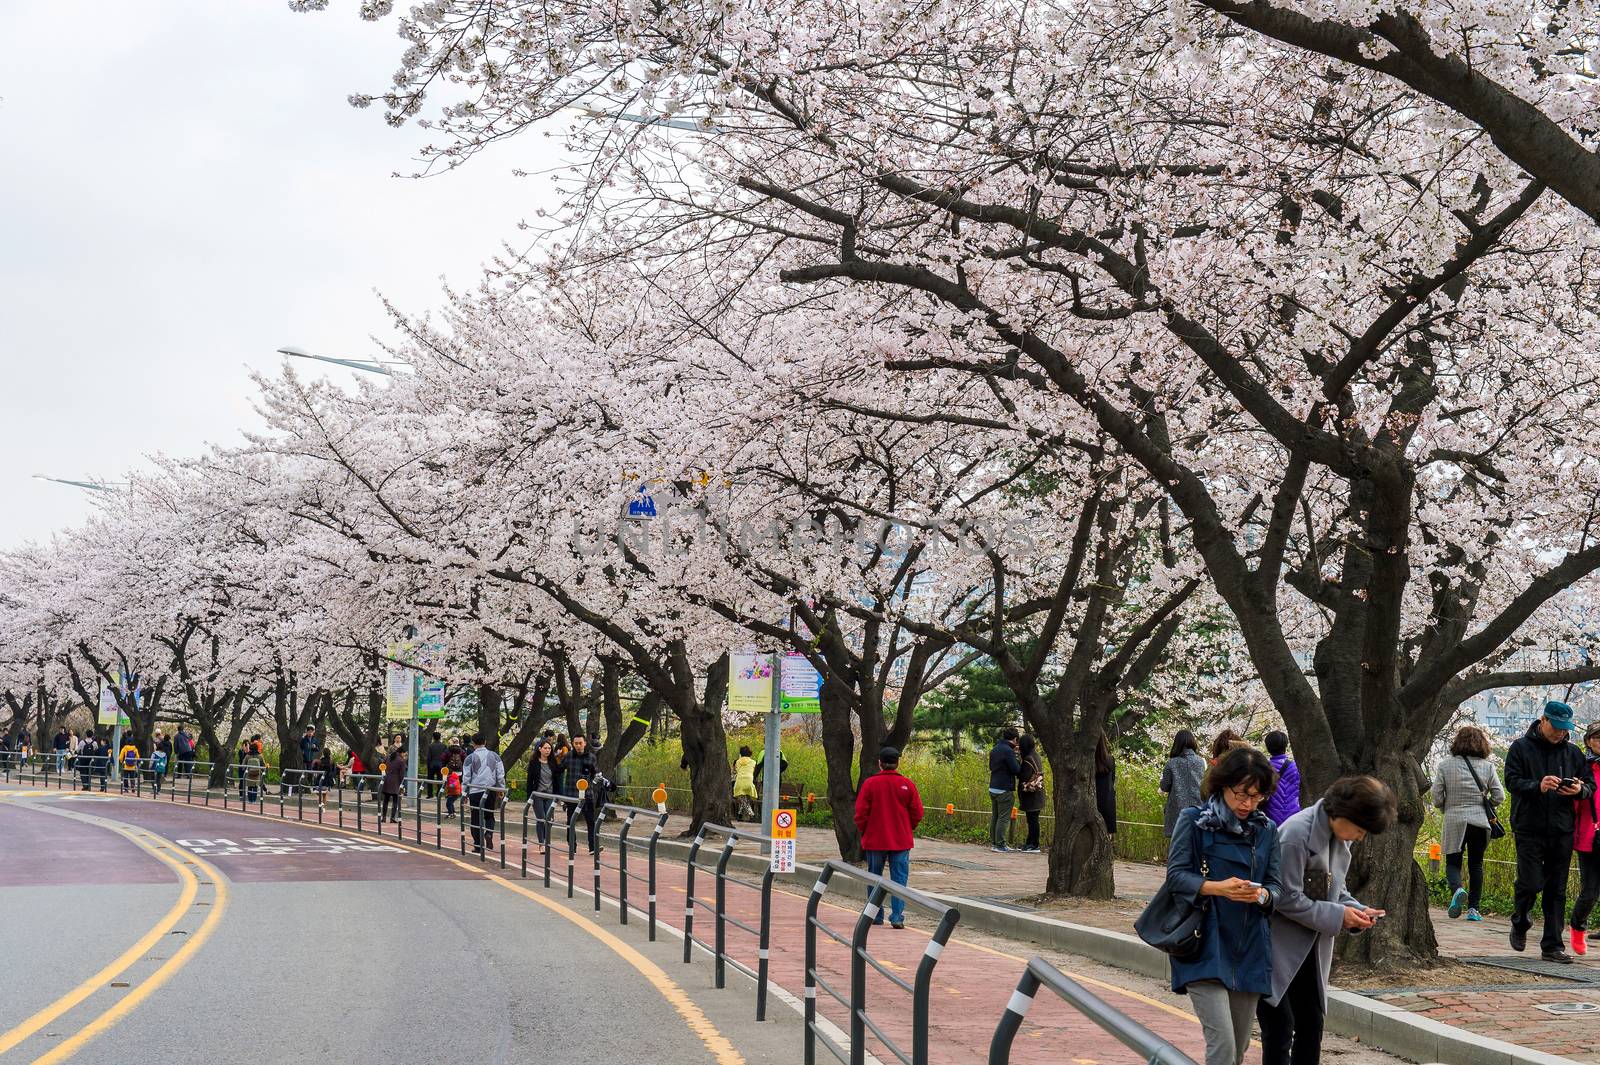 SEOUL,KOREA - APRIL 7 : Seoul cherry blossom festival in Korea.Tourists taking photos of the beautiful scenery around Seoul,Korea on April 7,2015.